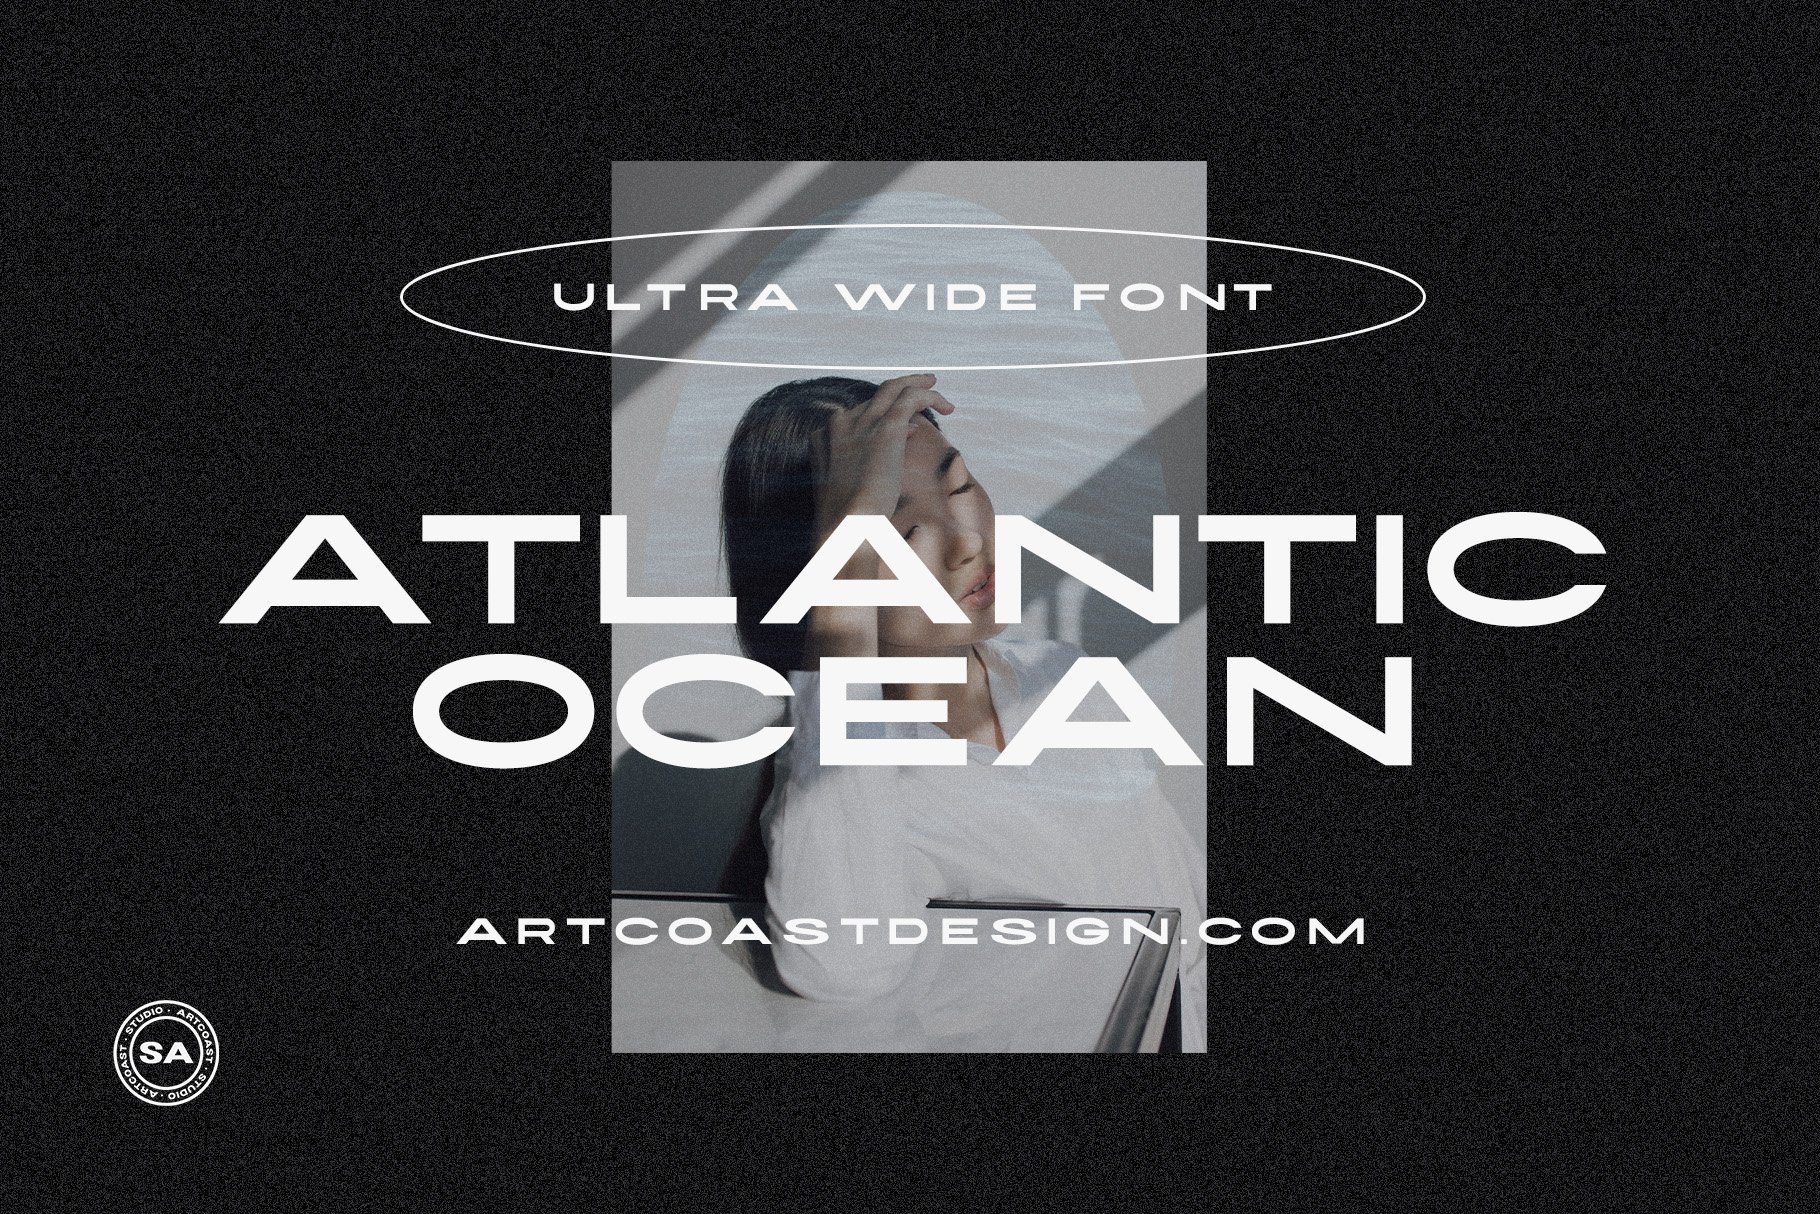 Atlantic Ocean | Ultra Wide Font cover image.